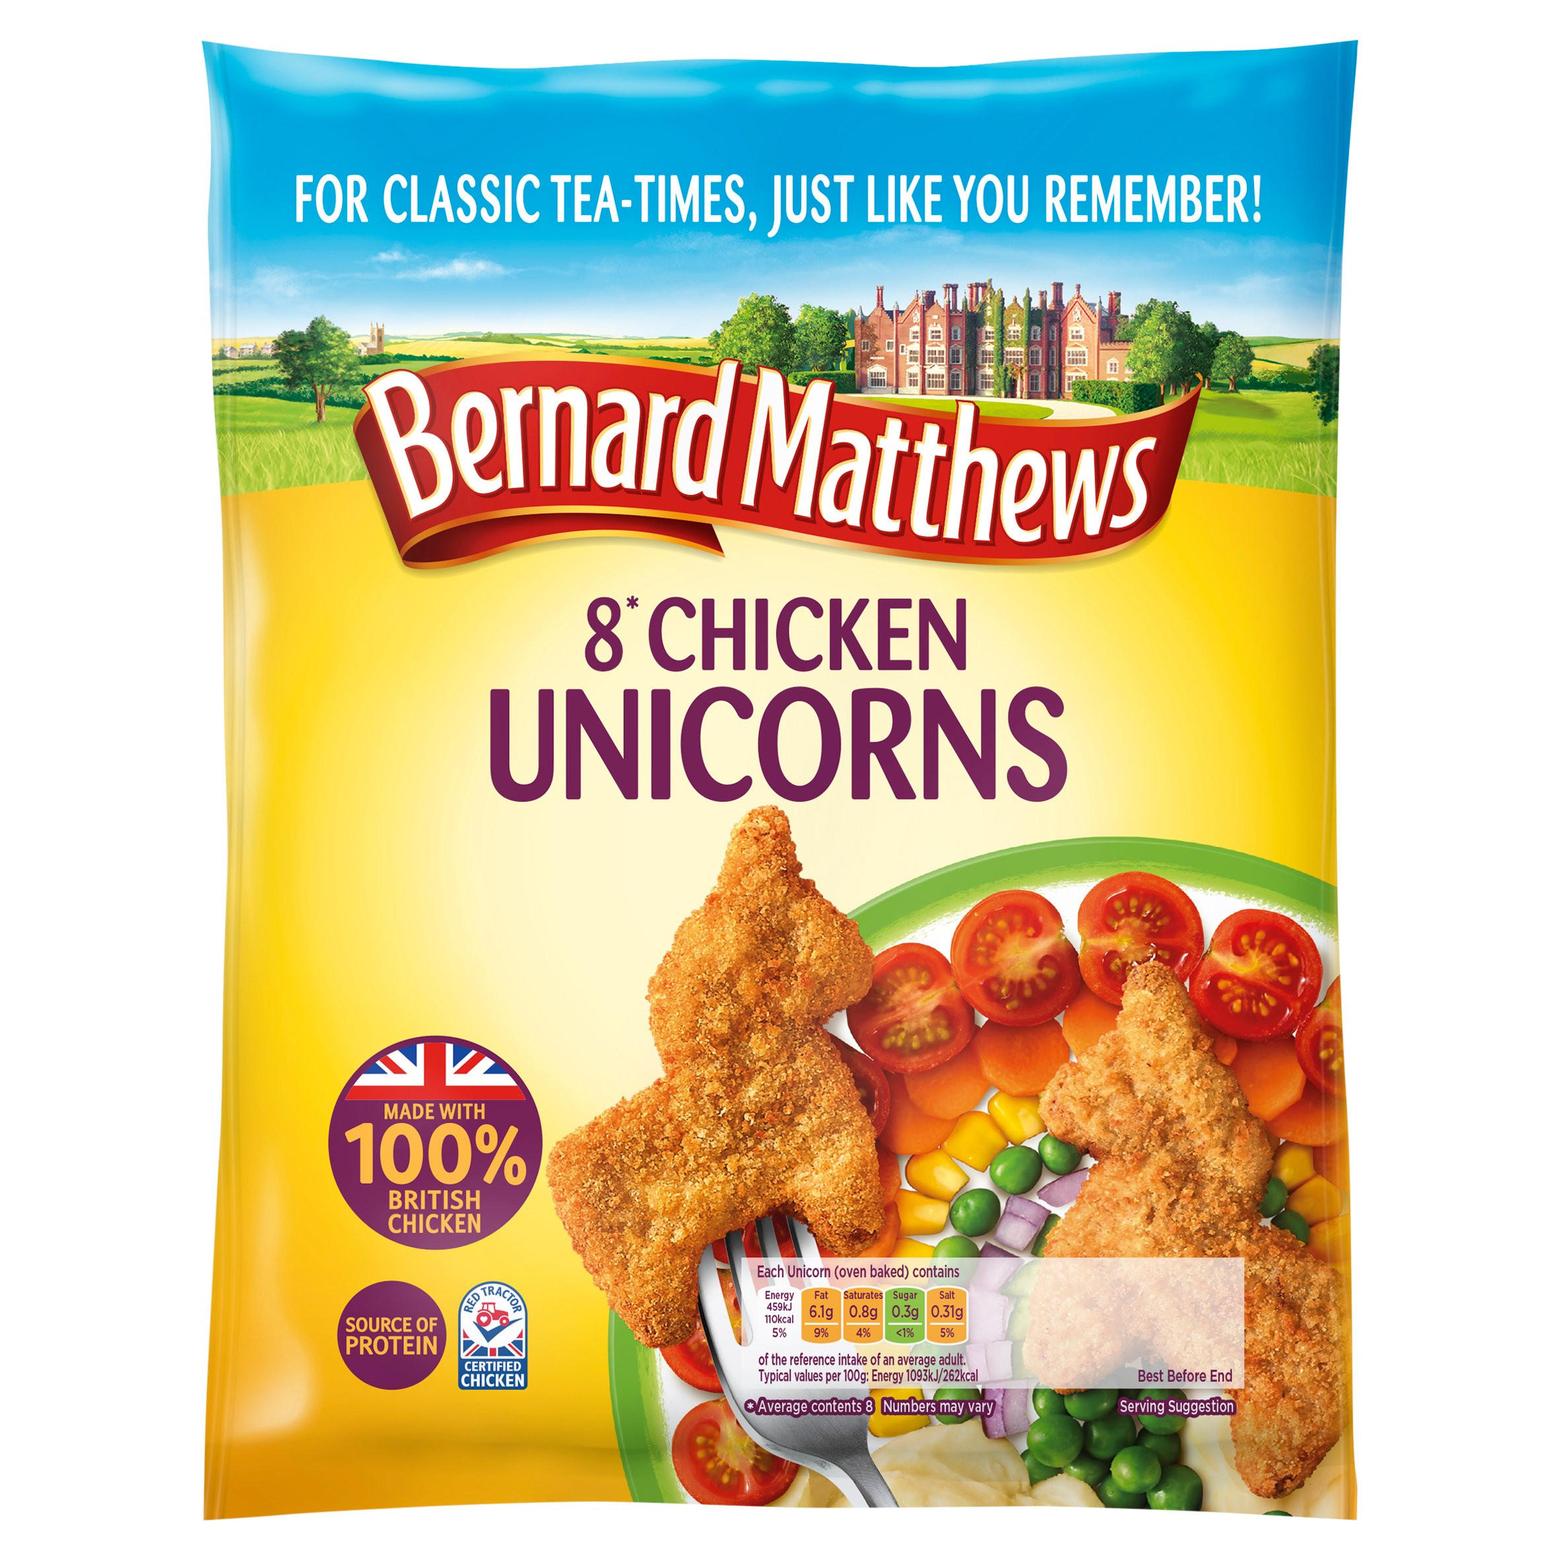 Bernard Matthews 8 Chicken Unicorns 336g offers at £1 in Iceland